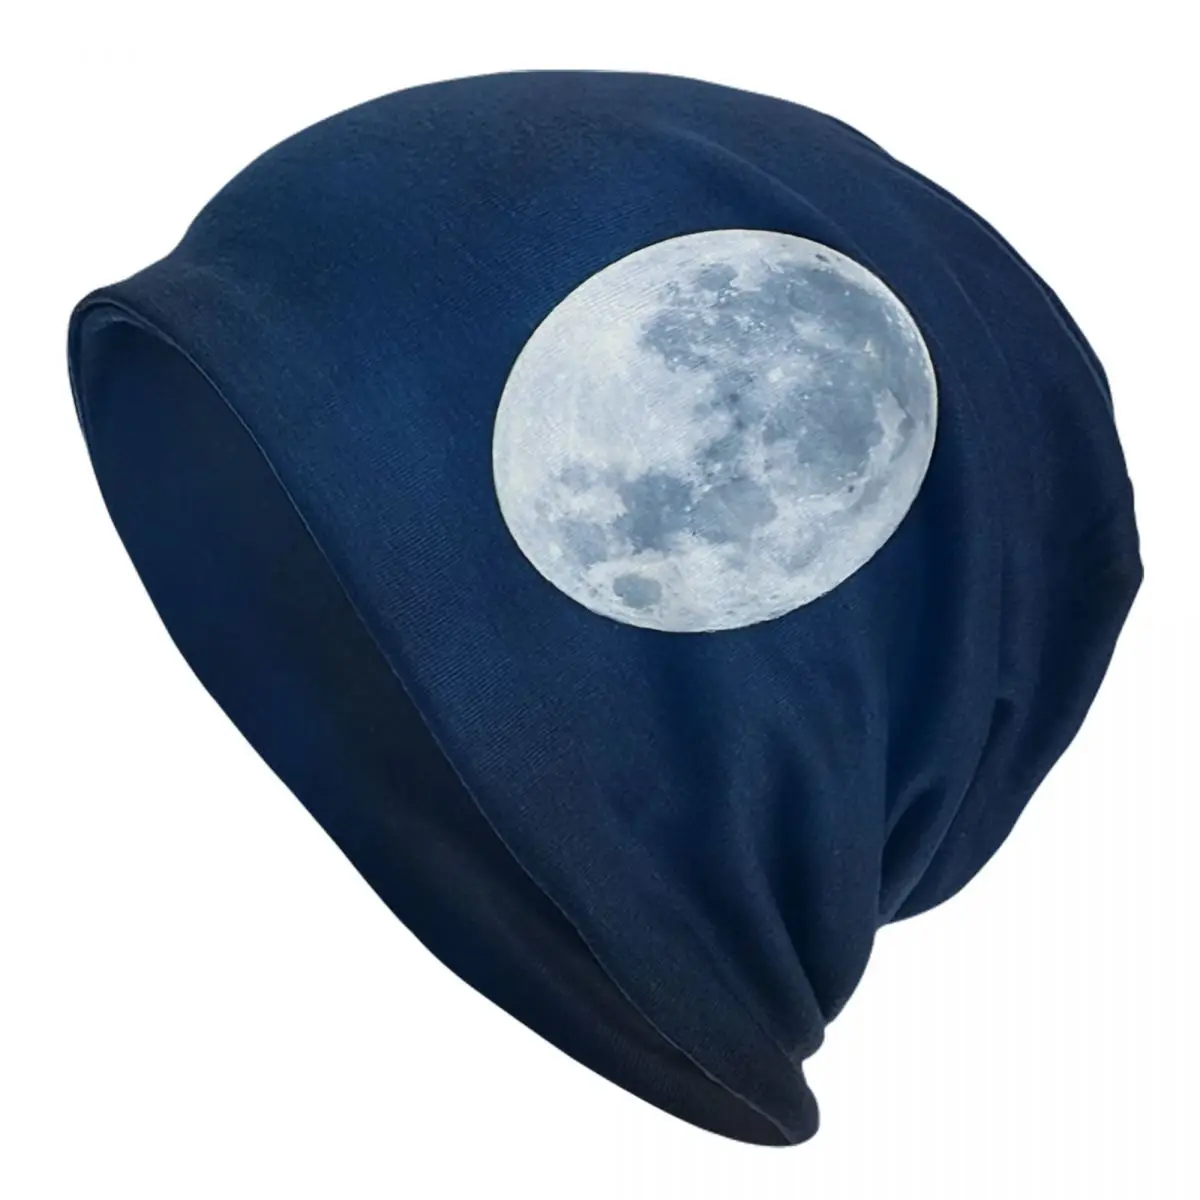 Strange Moonlight Moon Theme Adult Men's Women's Knit Hat Keep warm winter knitted hat